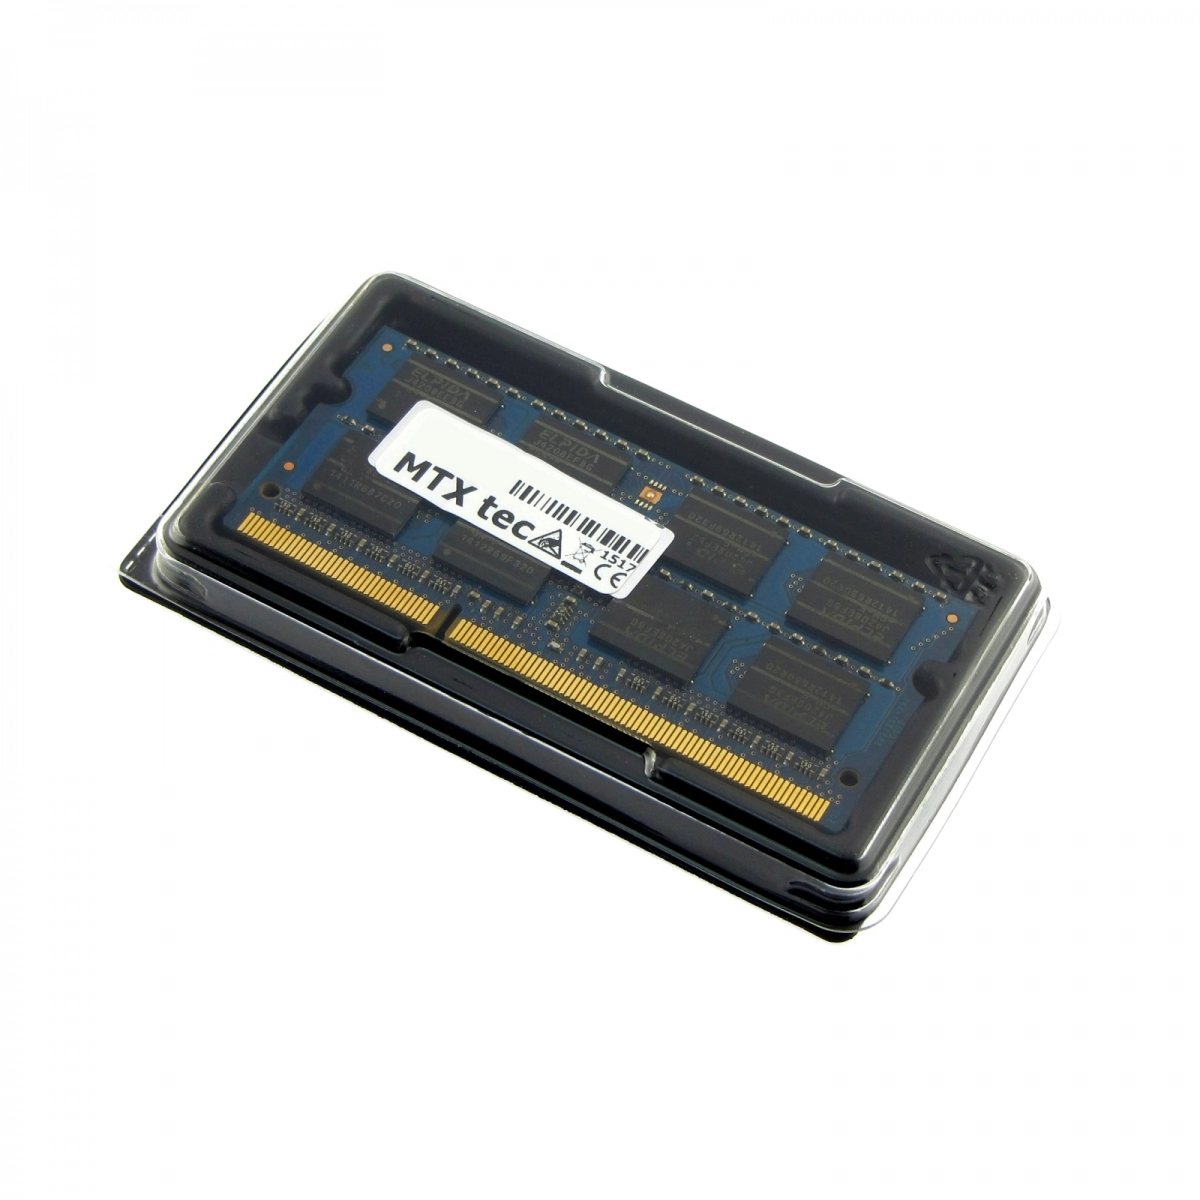 MTXtec Arbeitsspeicher 4 GB RAM für LENOVO ThinkPad T530